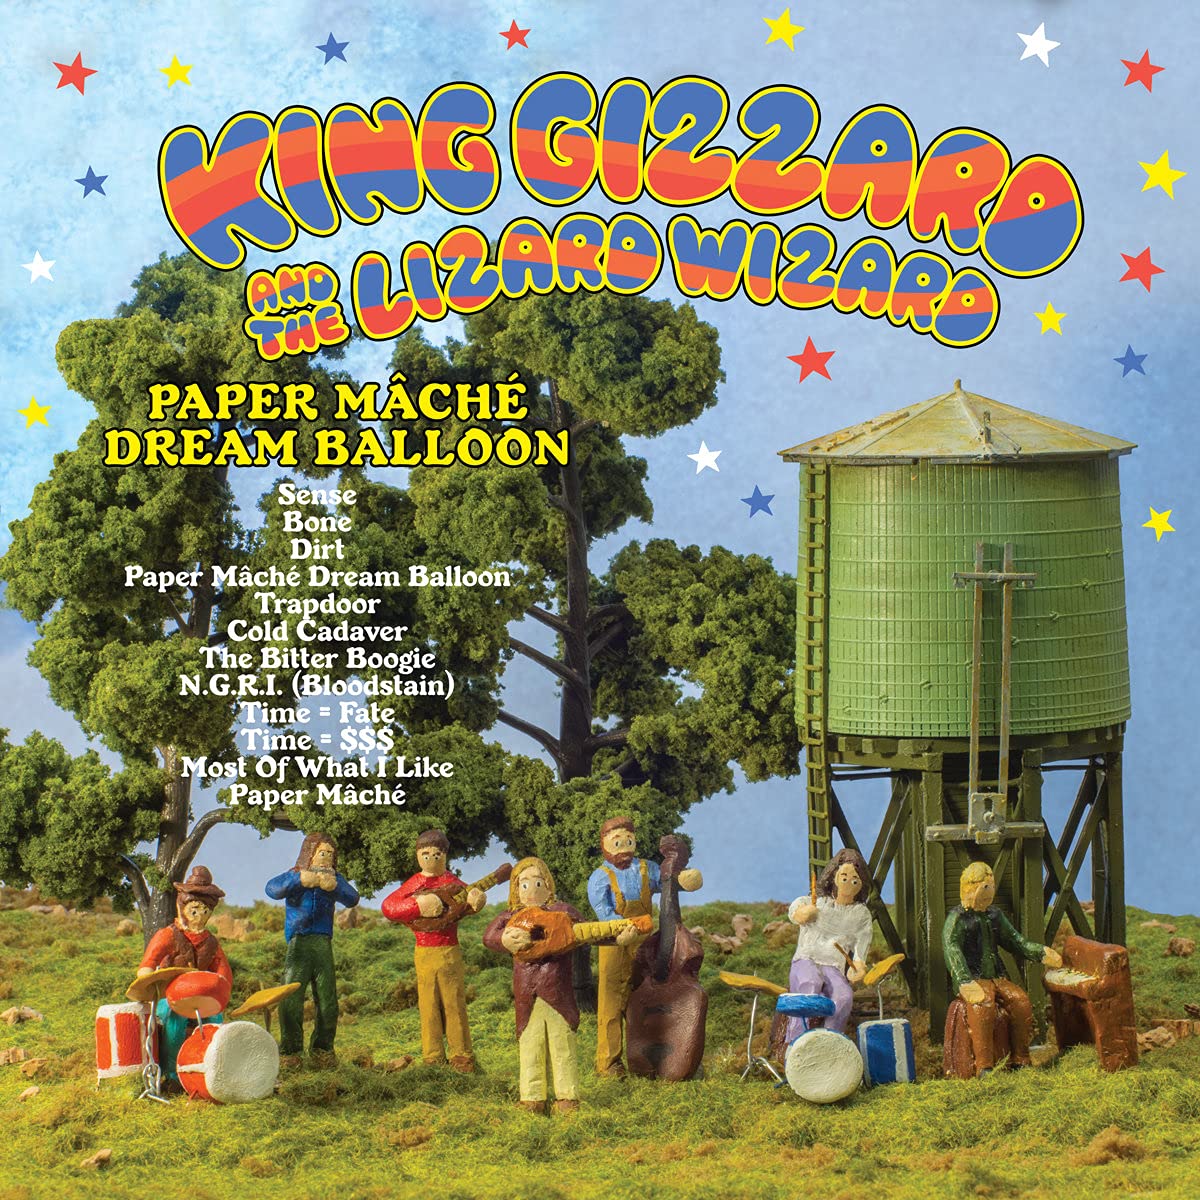 King Gizzard & The Lizard Wizard – Paper Mâché Dream Balloon [Deluxe Fresh Lemon/Mango Wave 2 LP]